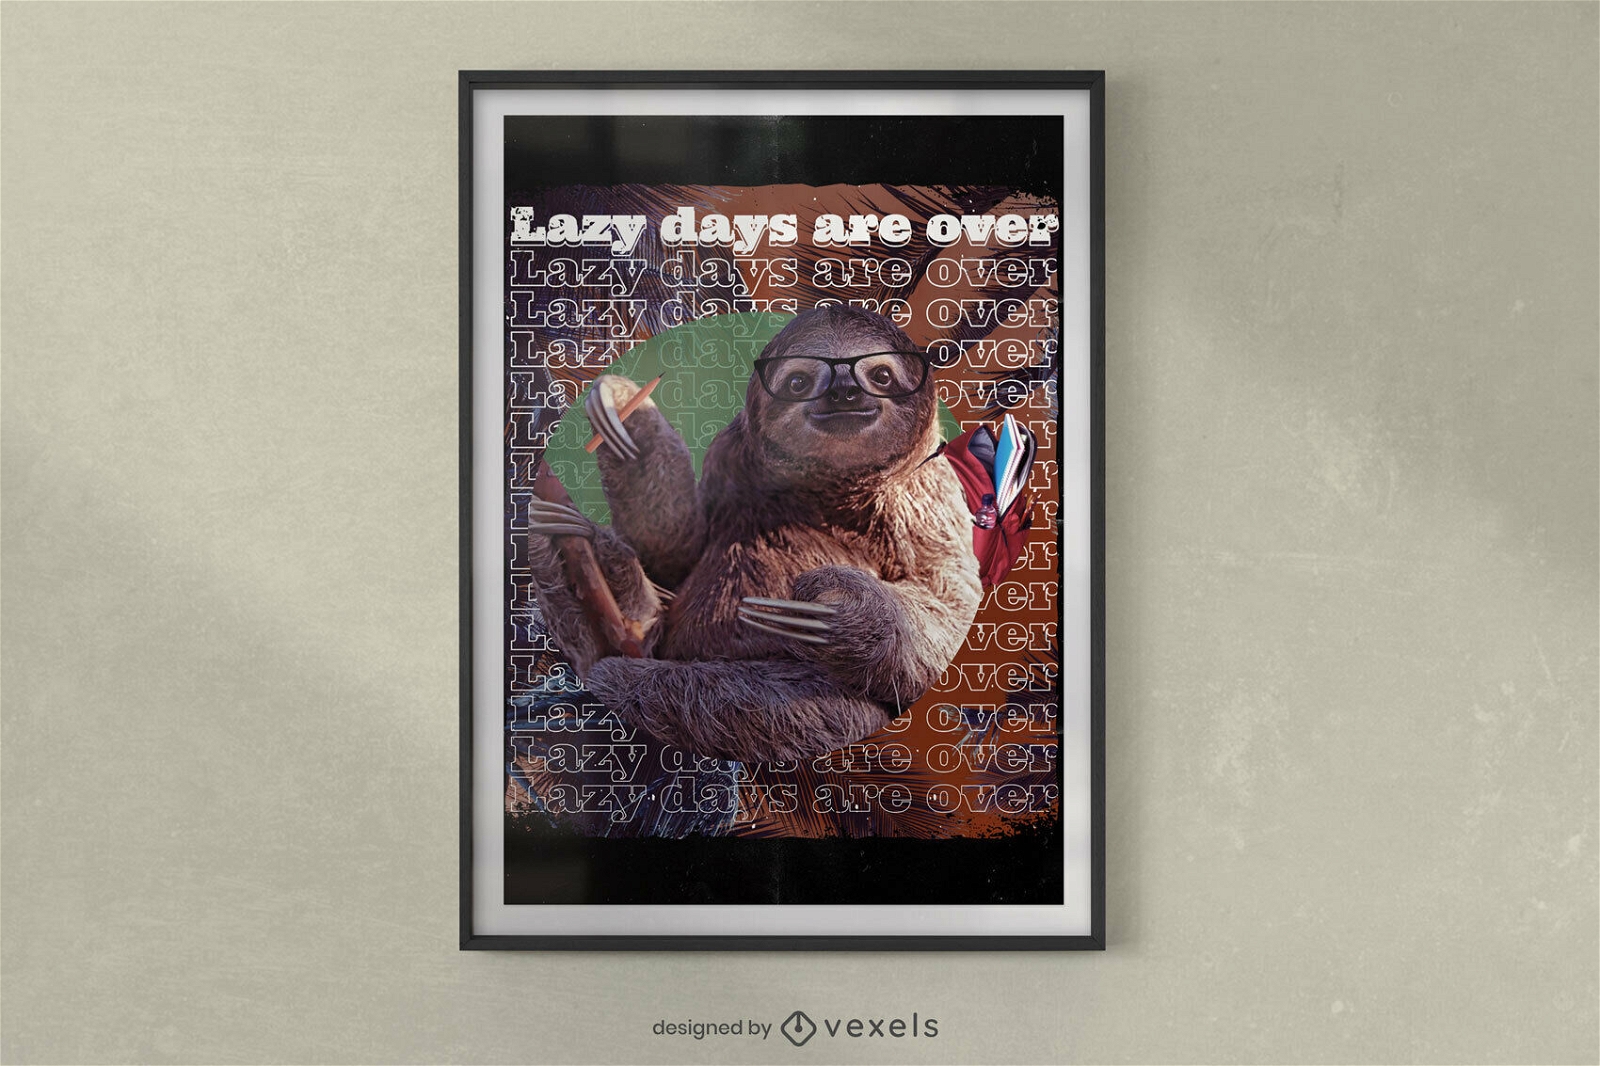 Lazy days sloth poster design